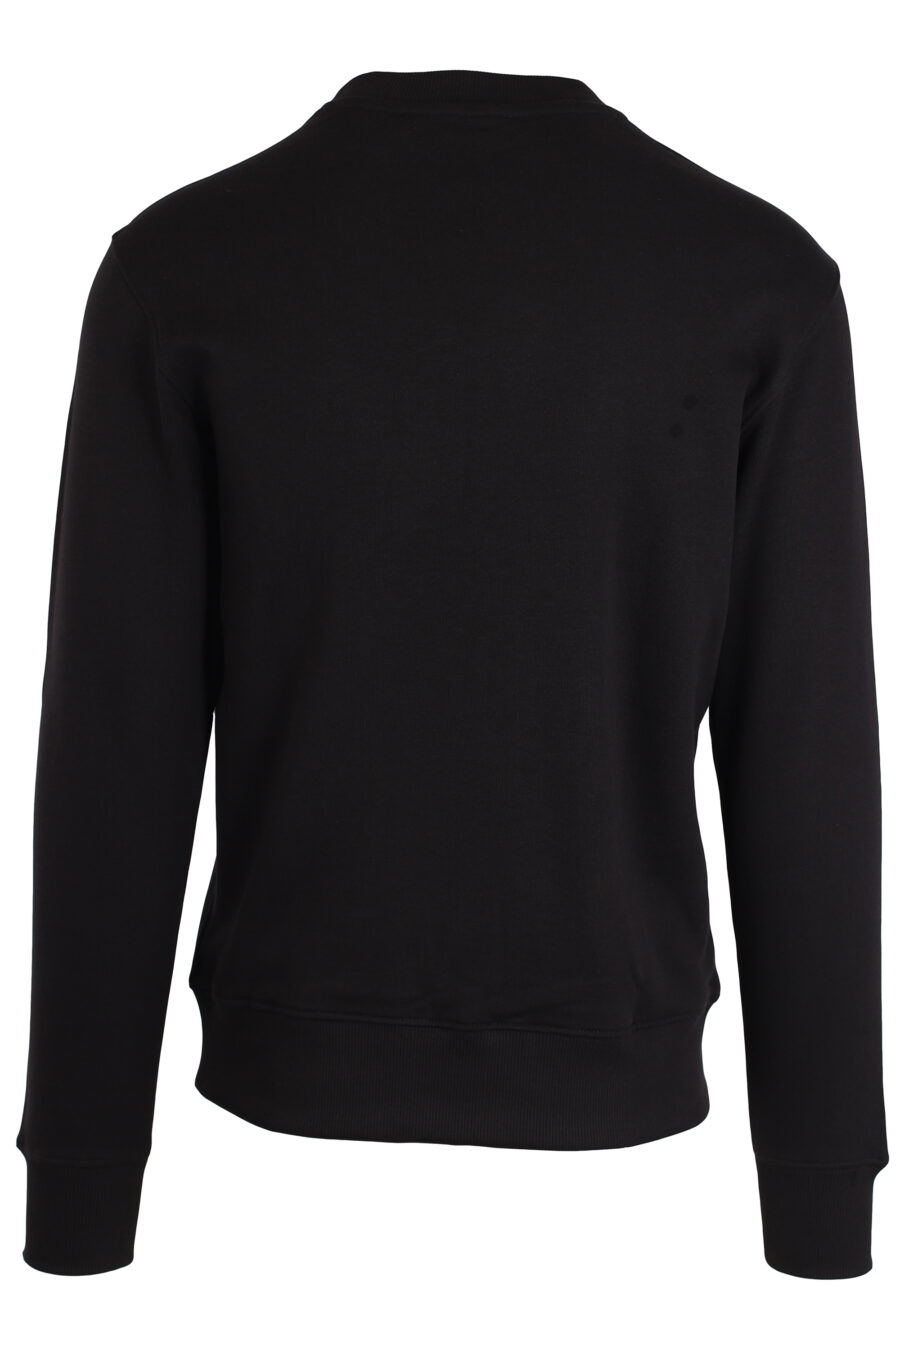 Black sweatshirt with small round silver logo - IMG 3983